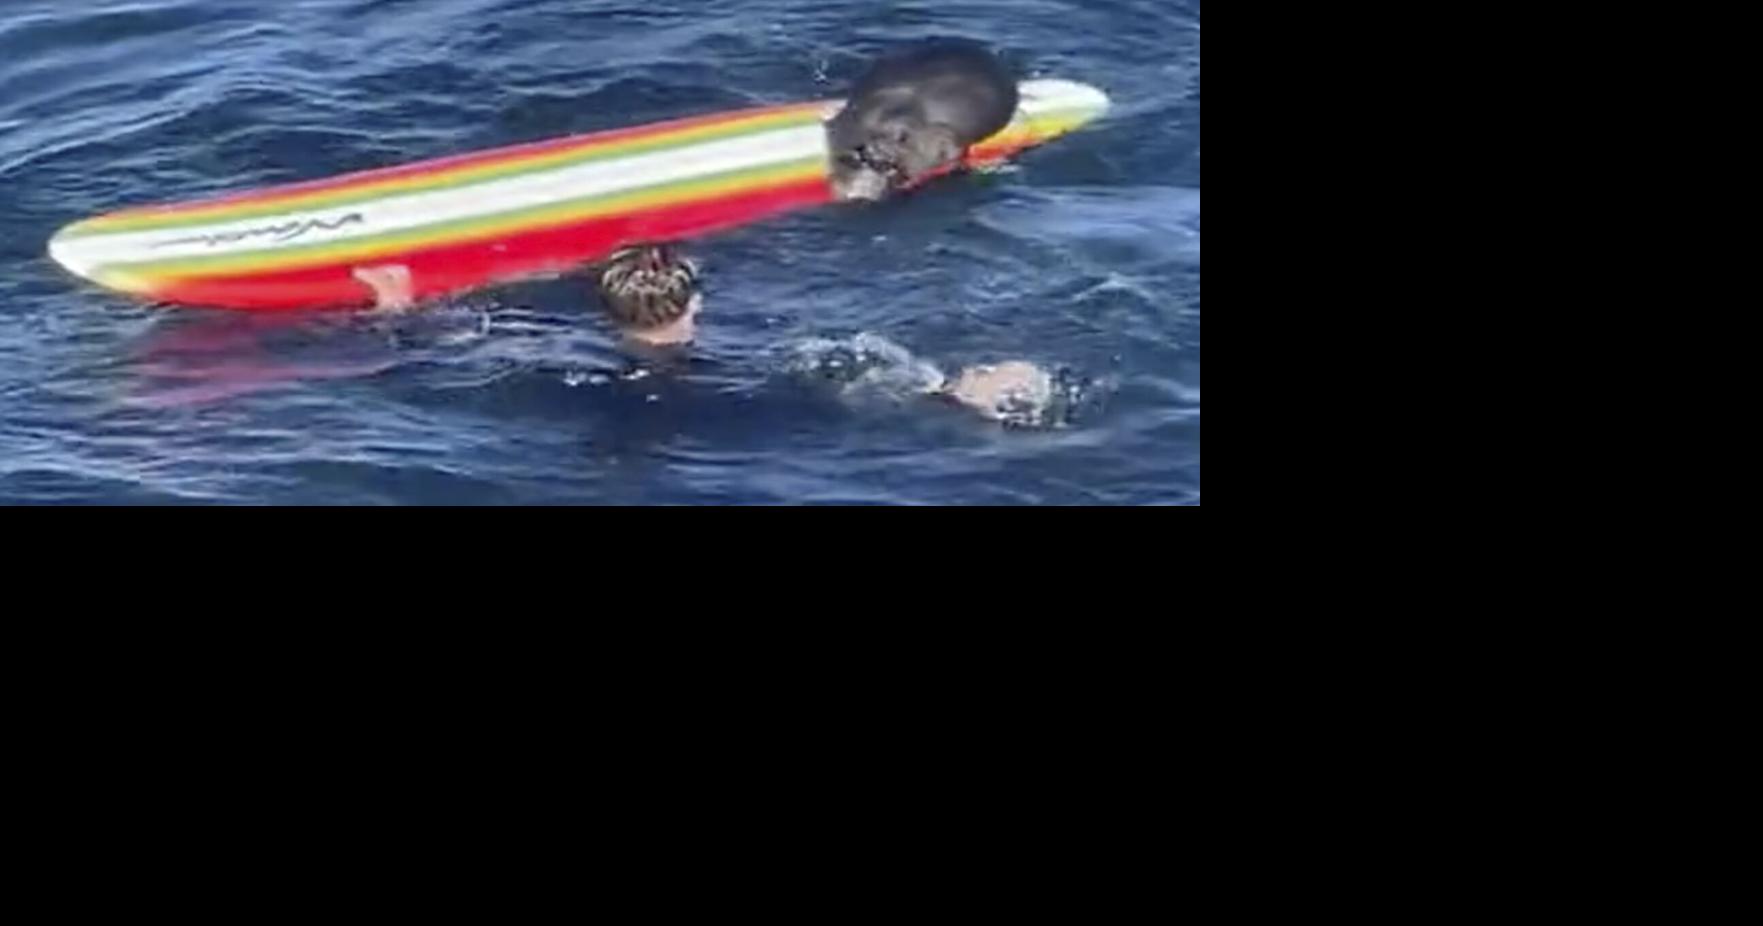 Sea otter harassing surfers off California coast goes viral